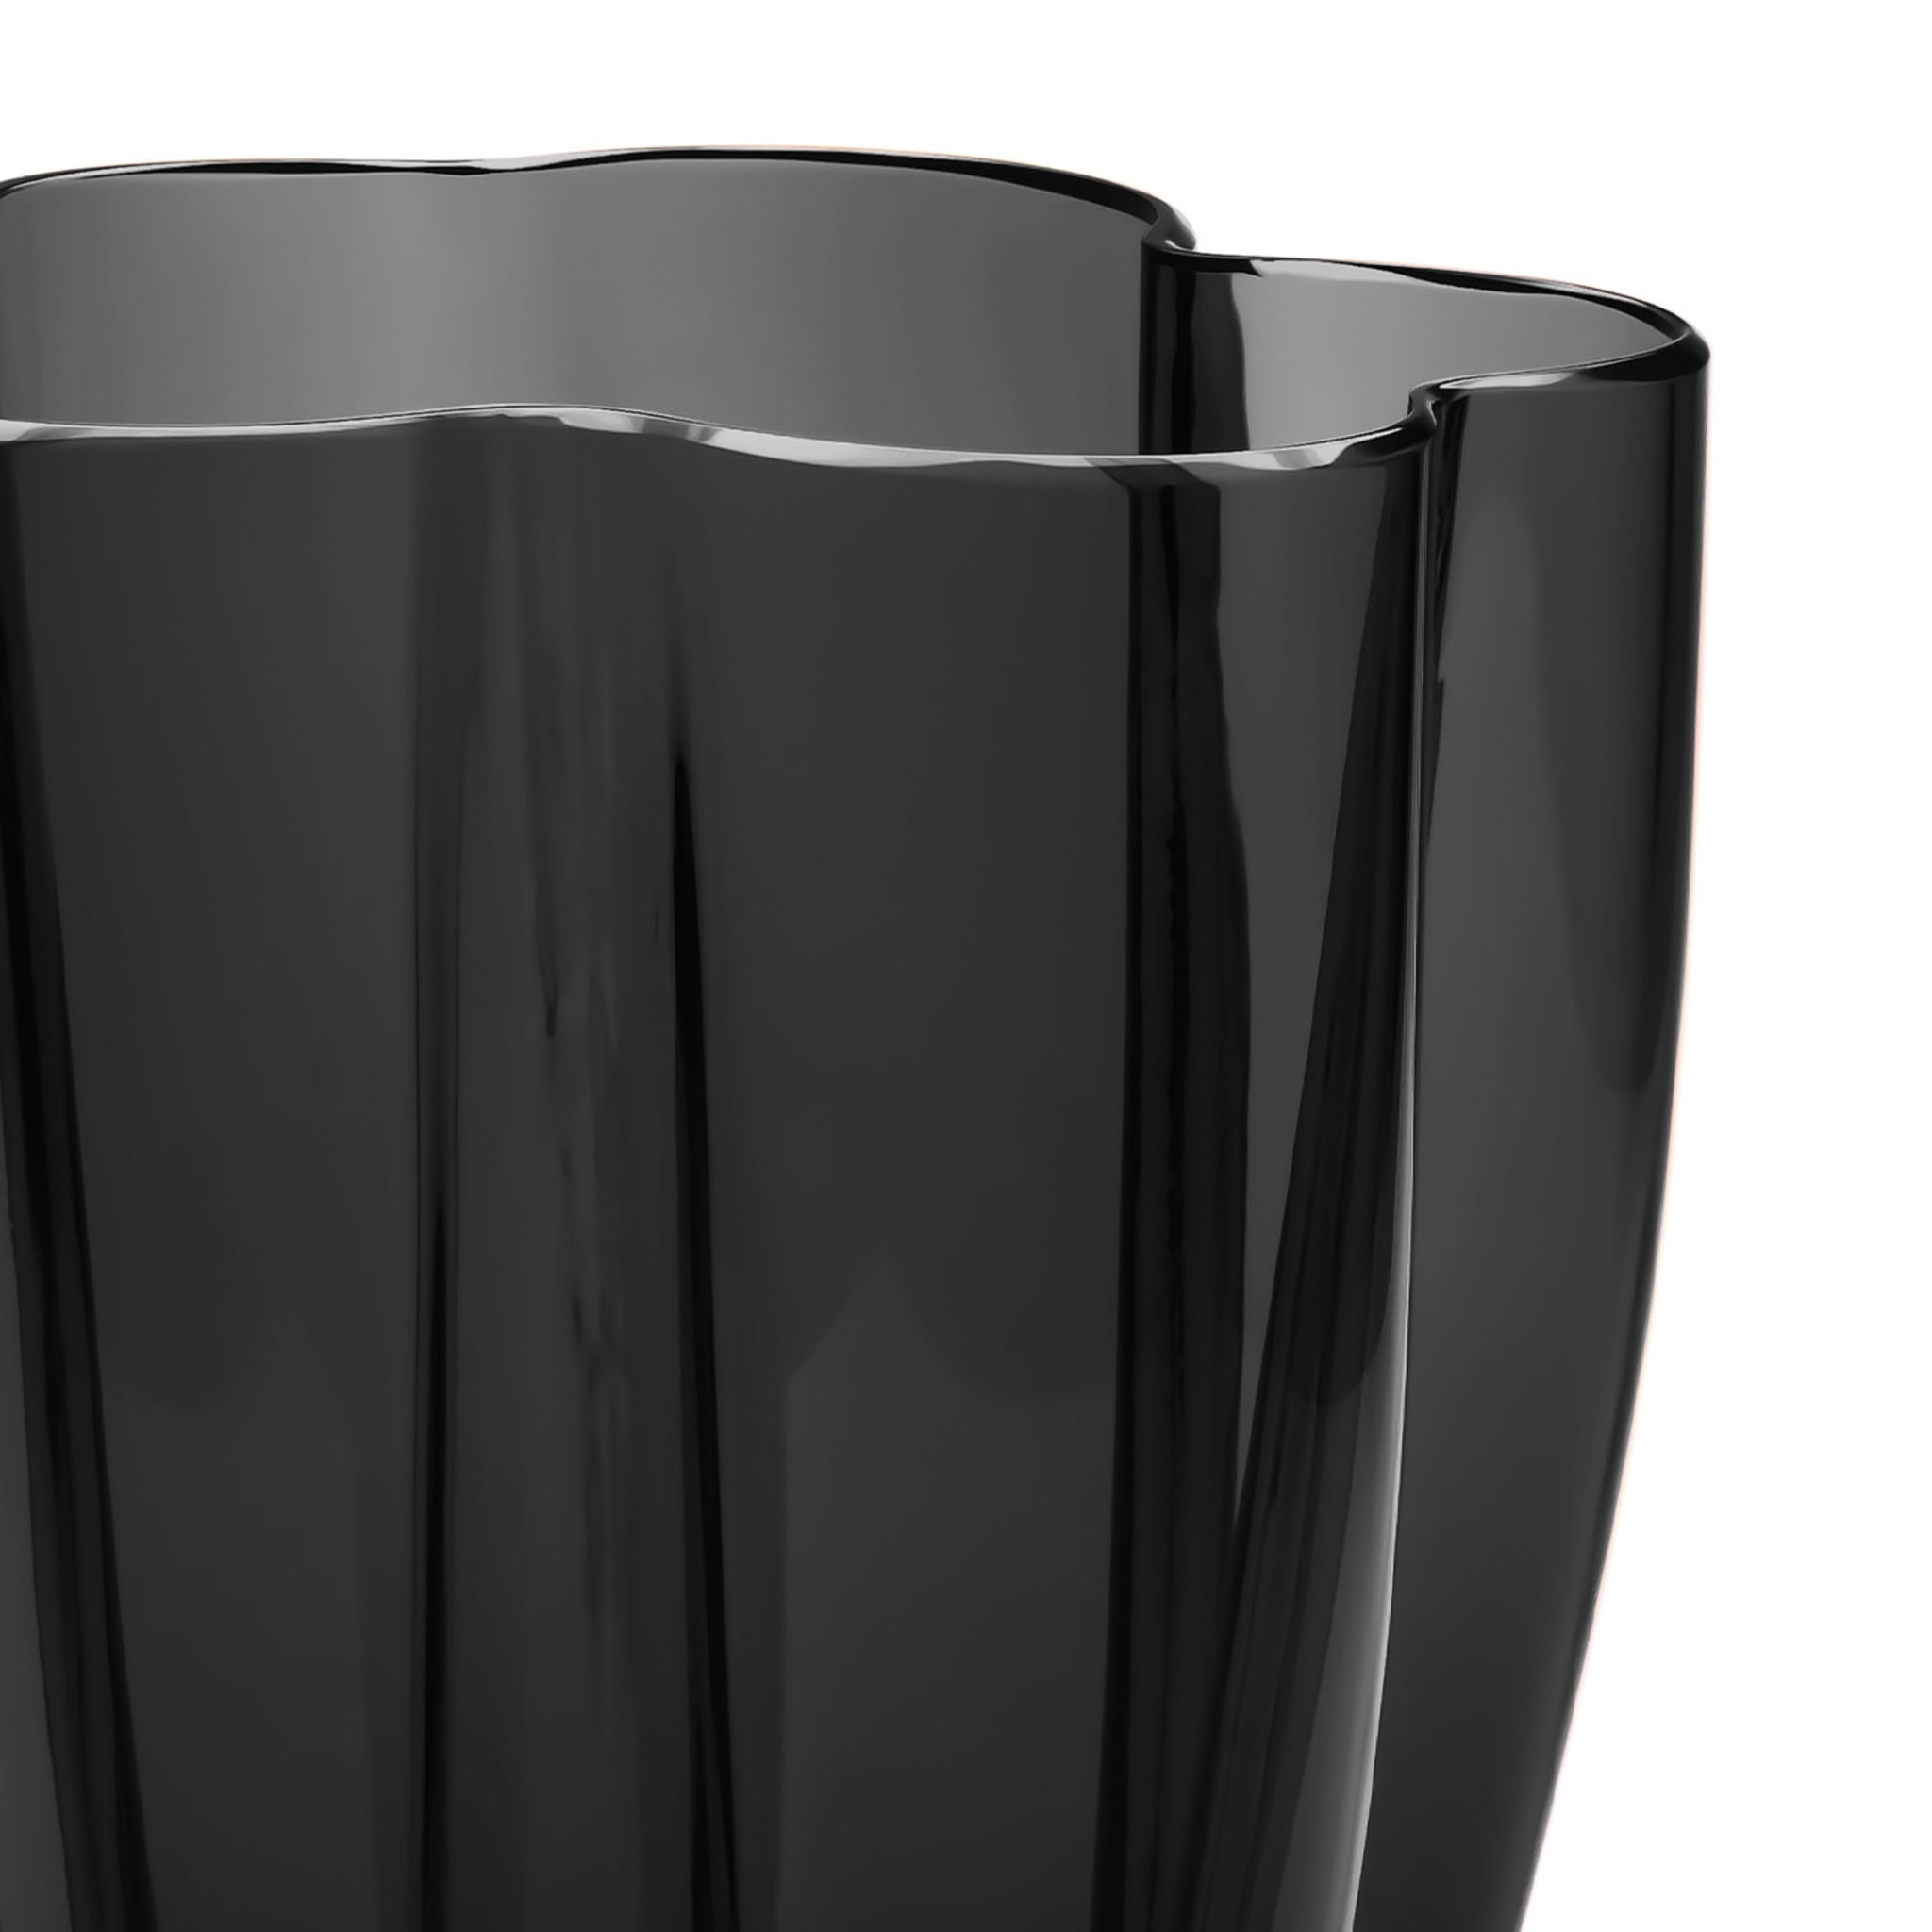 Petalo Black Gondola Small Vase - Alternative view 1